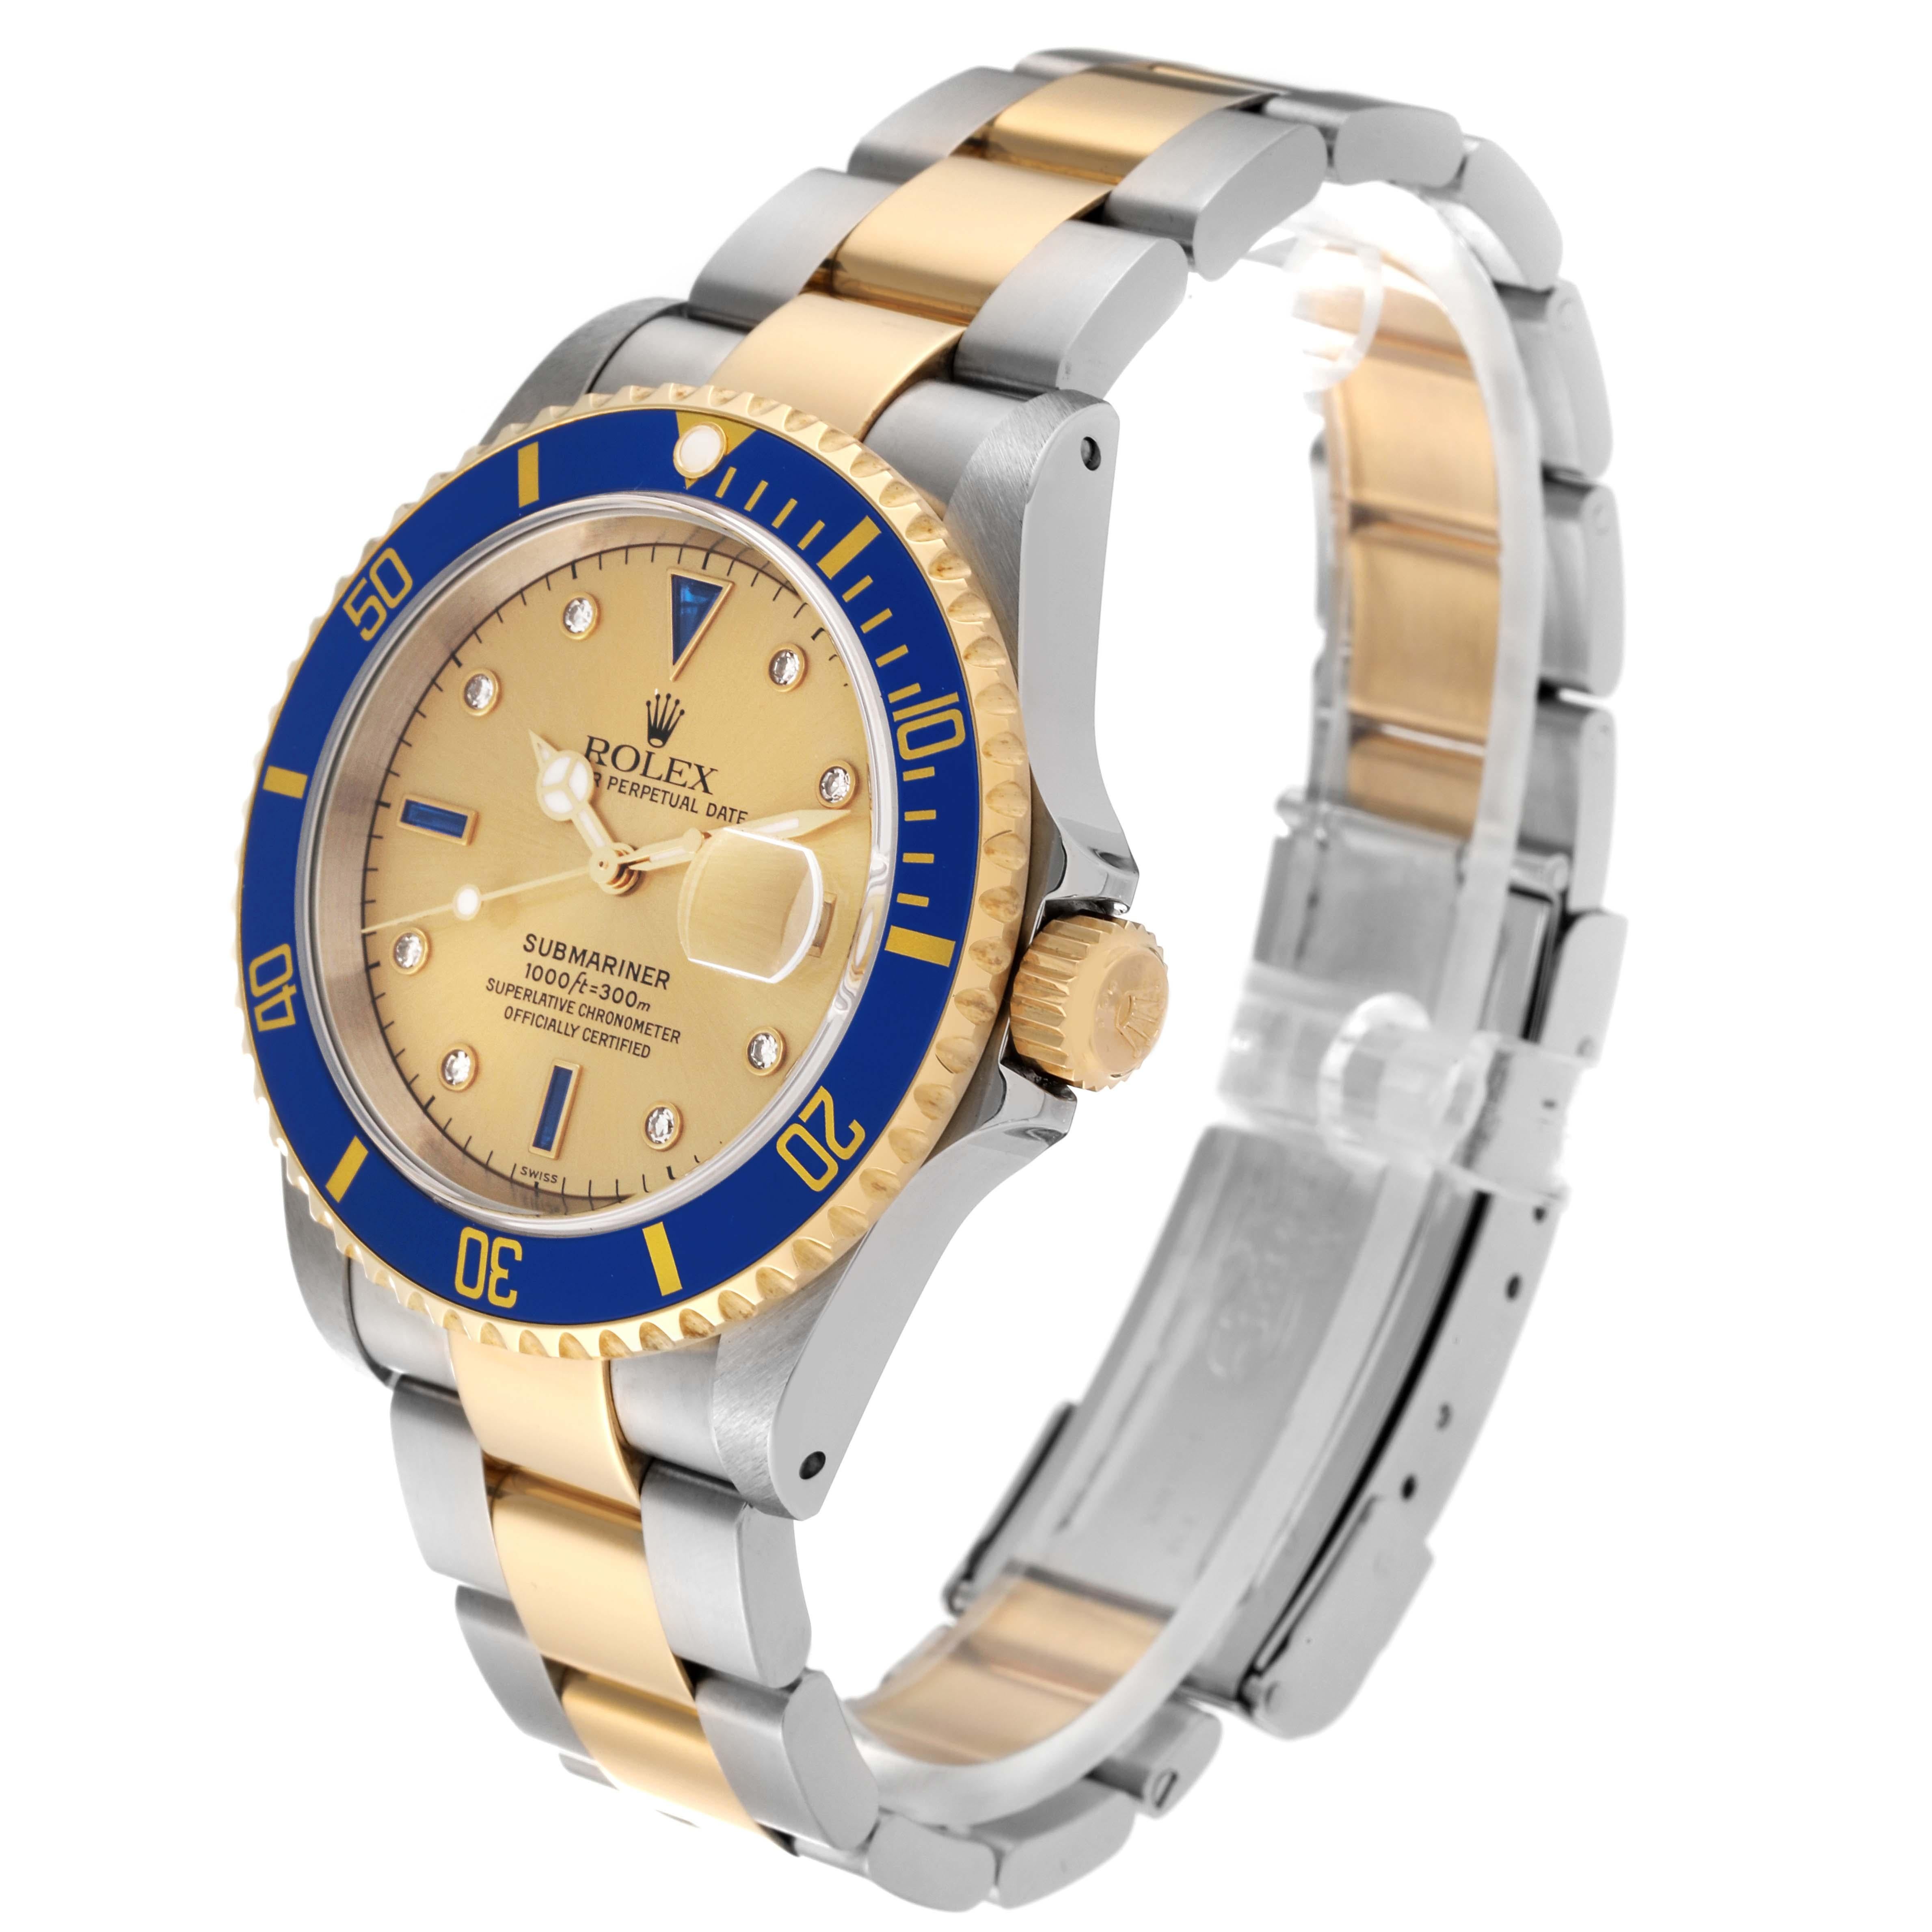 Men's Rolex Submariner Steel Yellow Gold Diamond Serti Dial Watch 16613 Unworn NOS For Sale